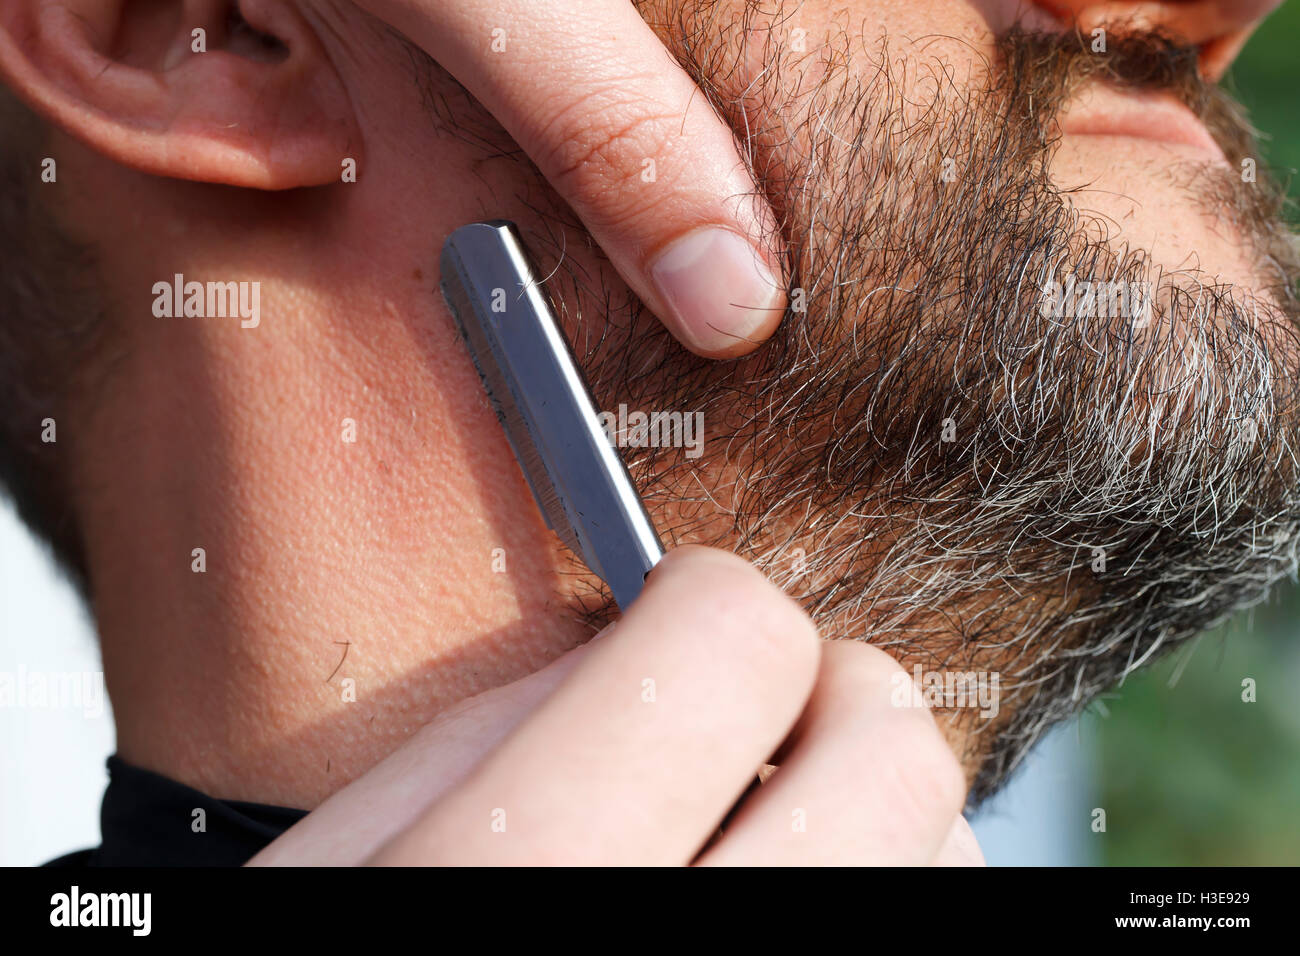 Master barber shears beard man close up Stock Photo